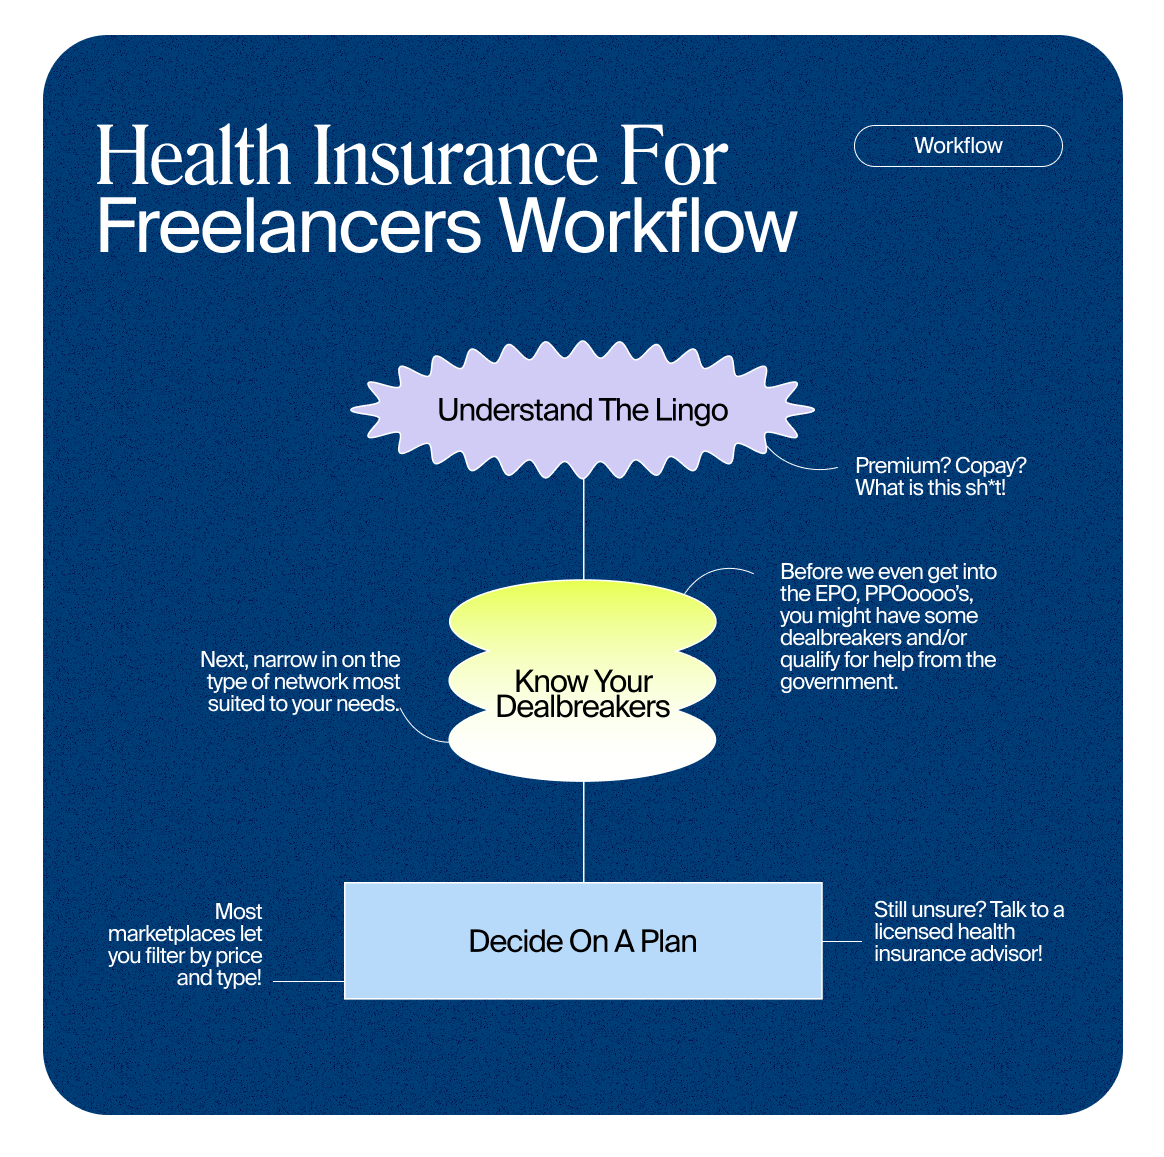 Health Insurance For Freelancers workflow banner